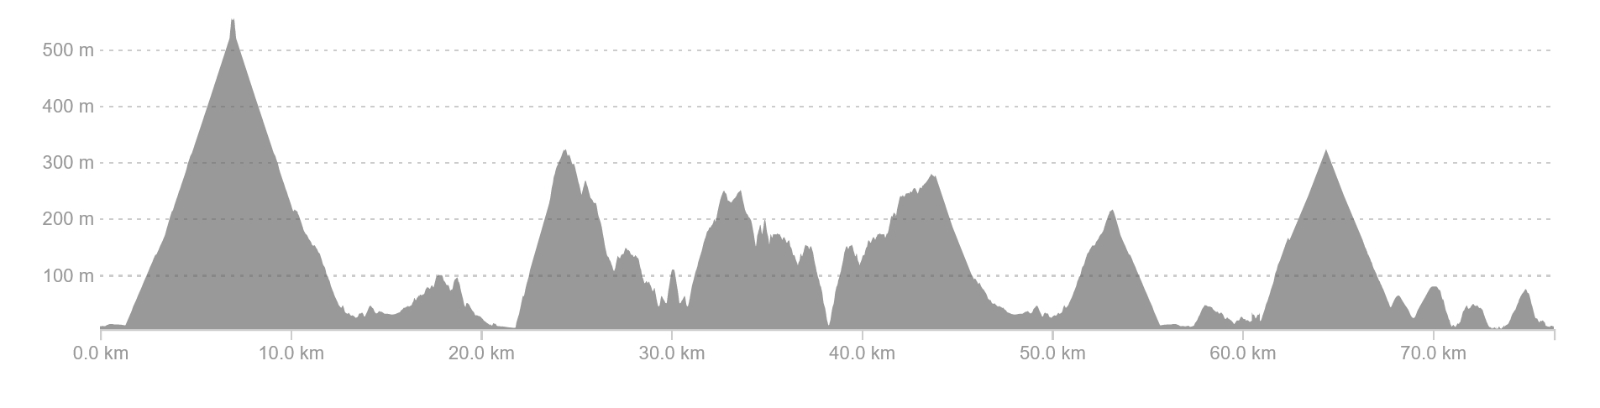 2023 Prom 80 km Elevation Profile